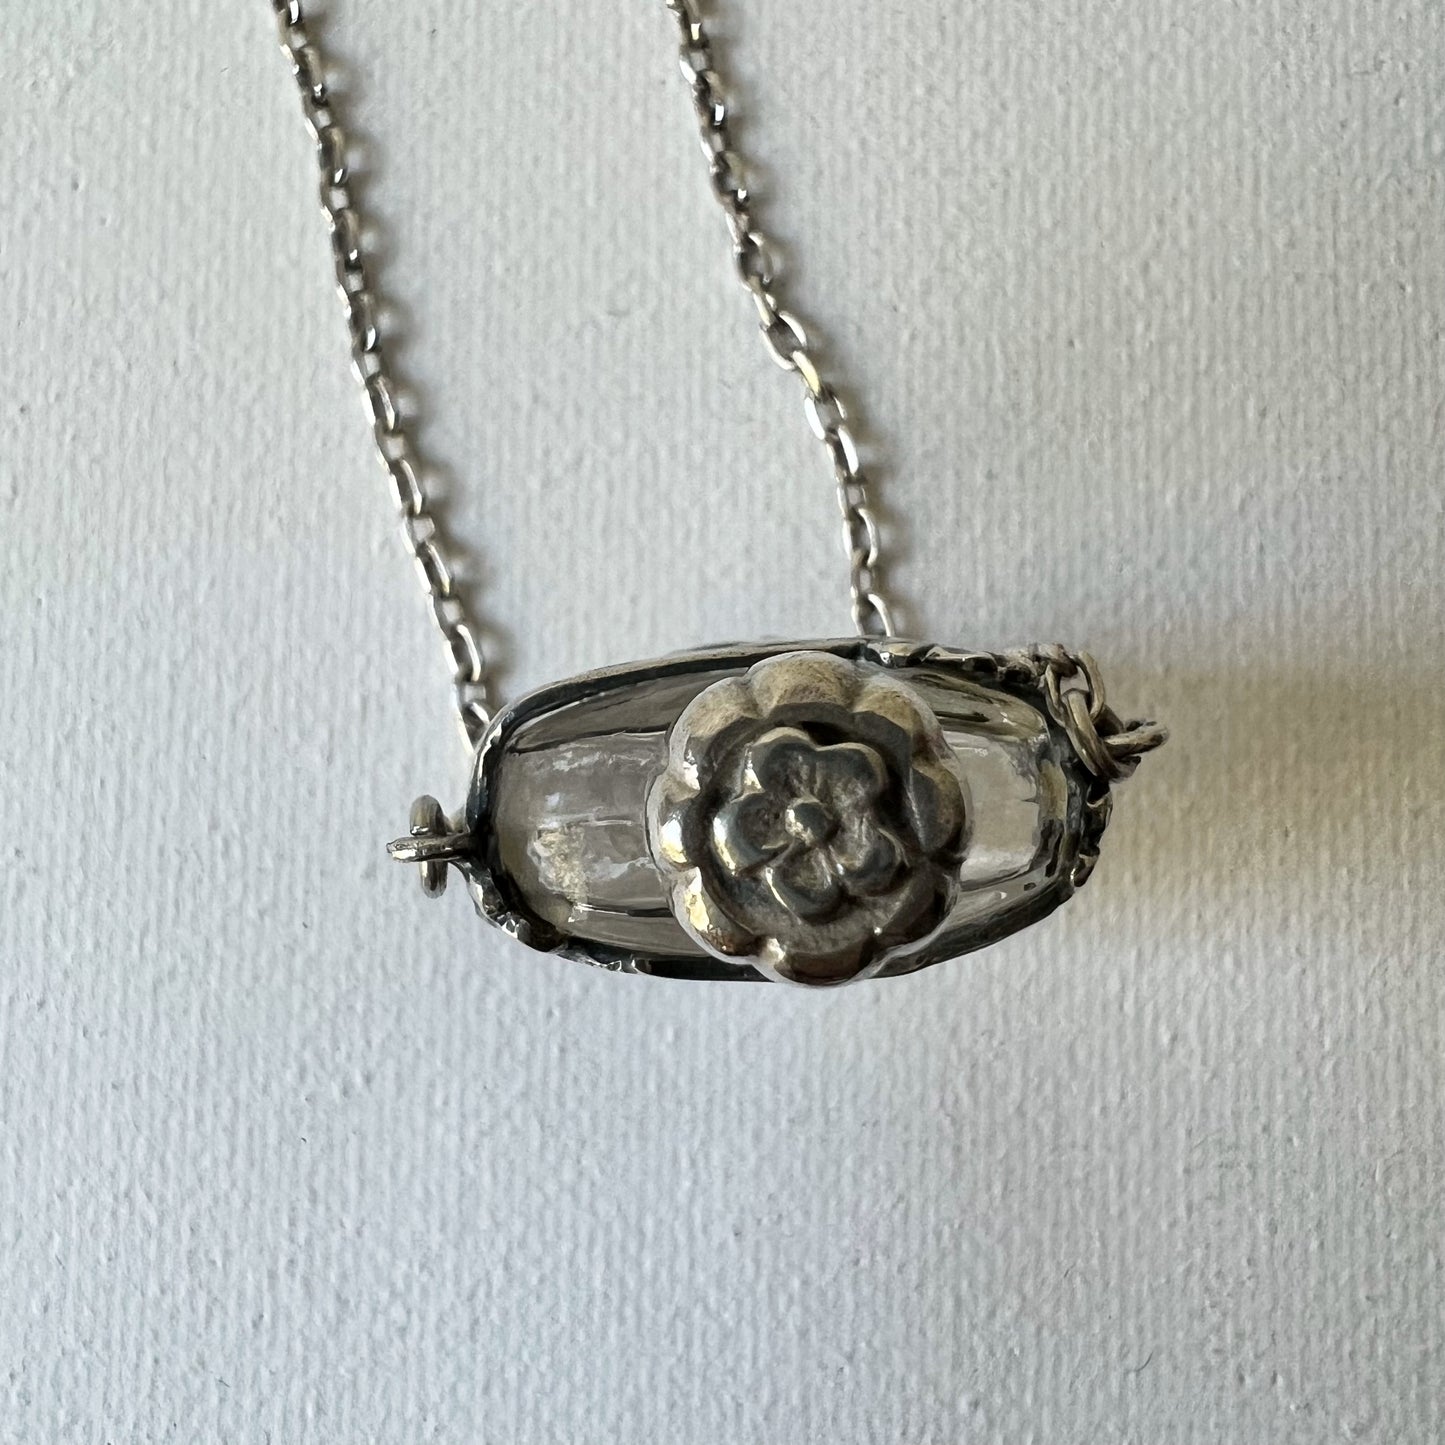 【Antique】France - Silver Perfume Bottle Necklace